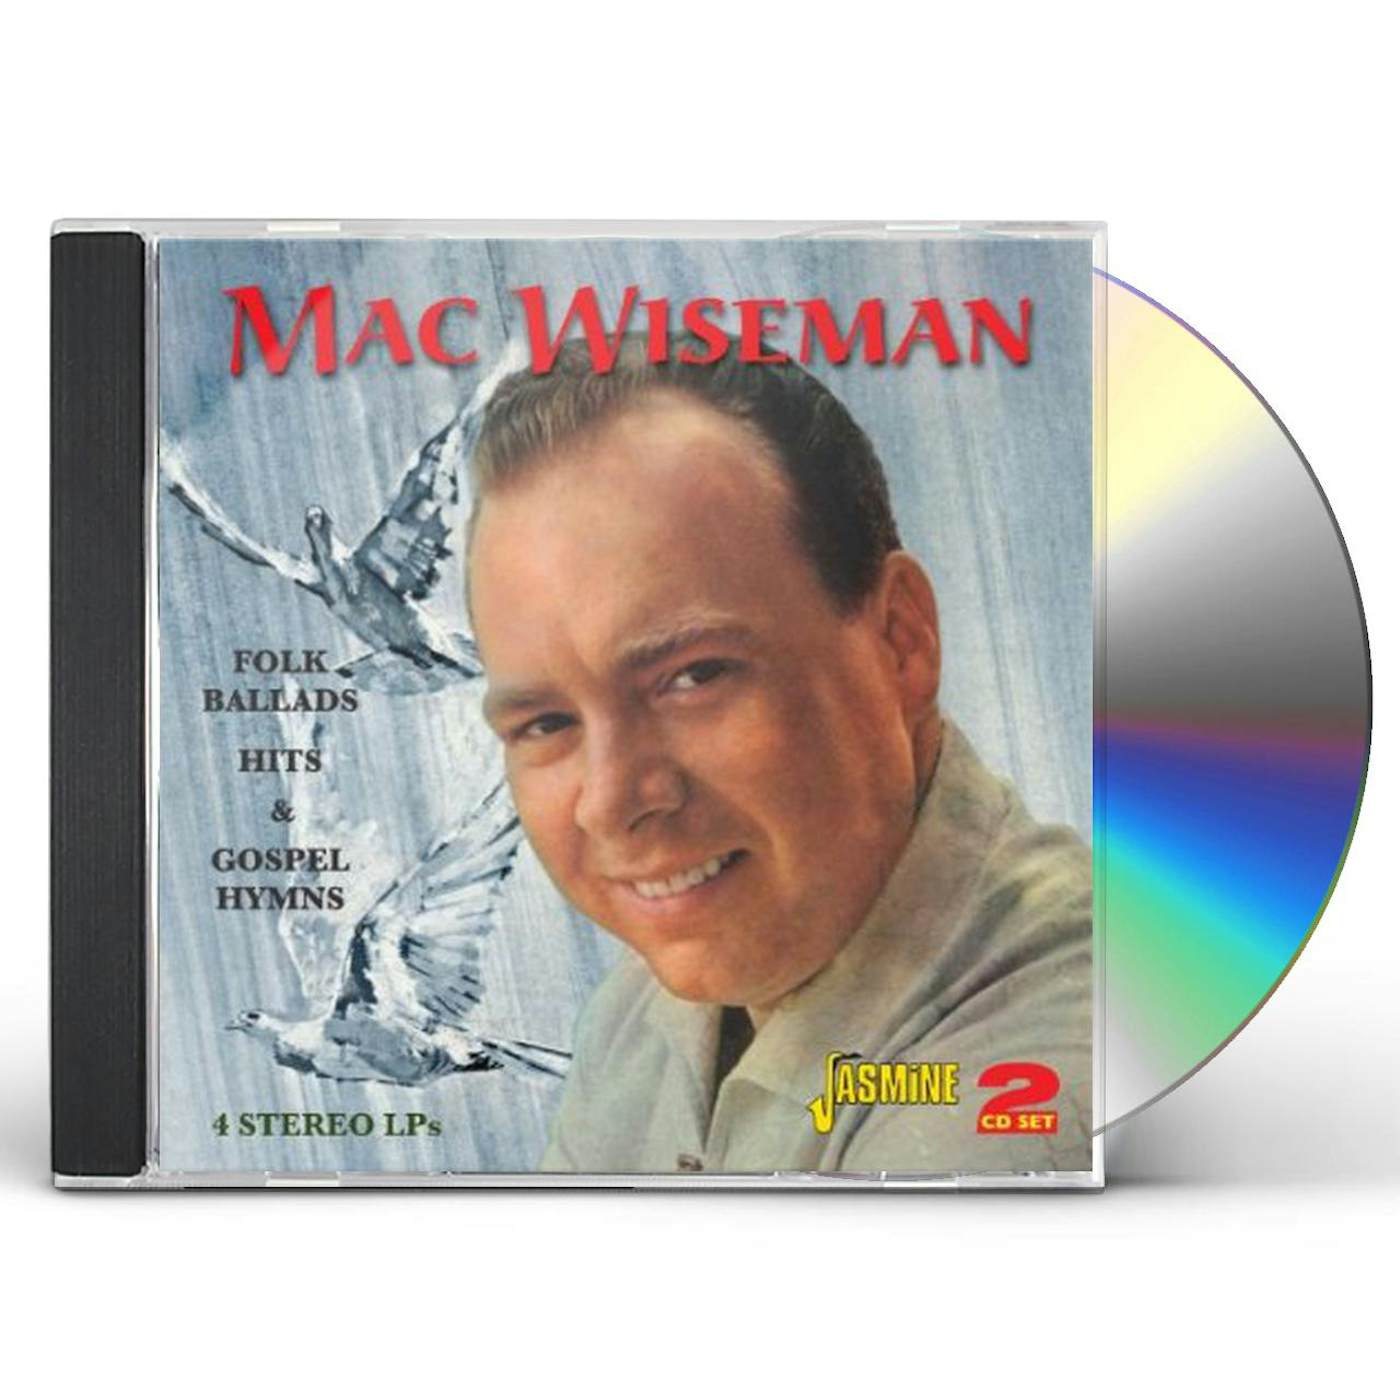 Mac Wiseman FOLK BALLADS HITS & GOSPEL HYMNS CD